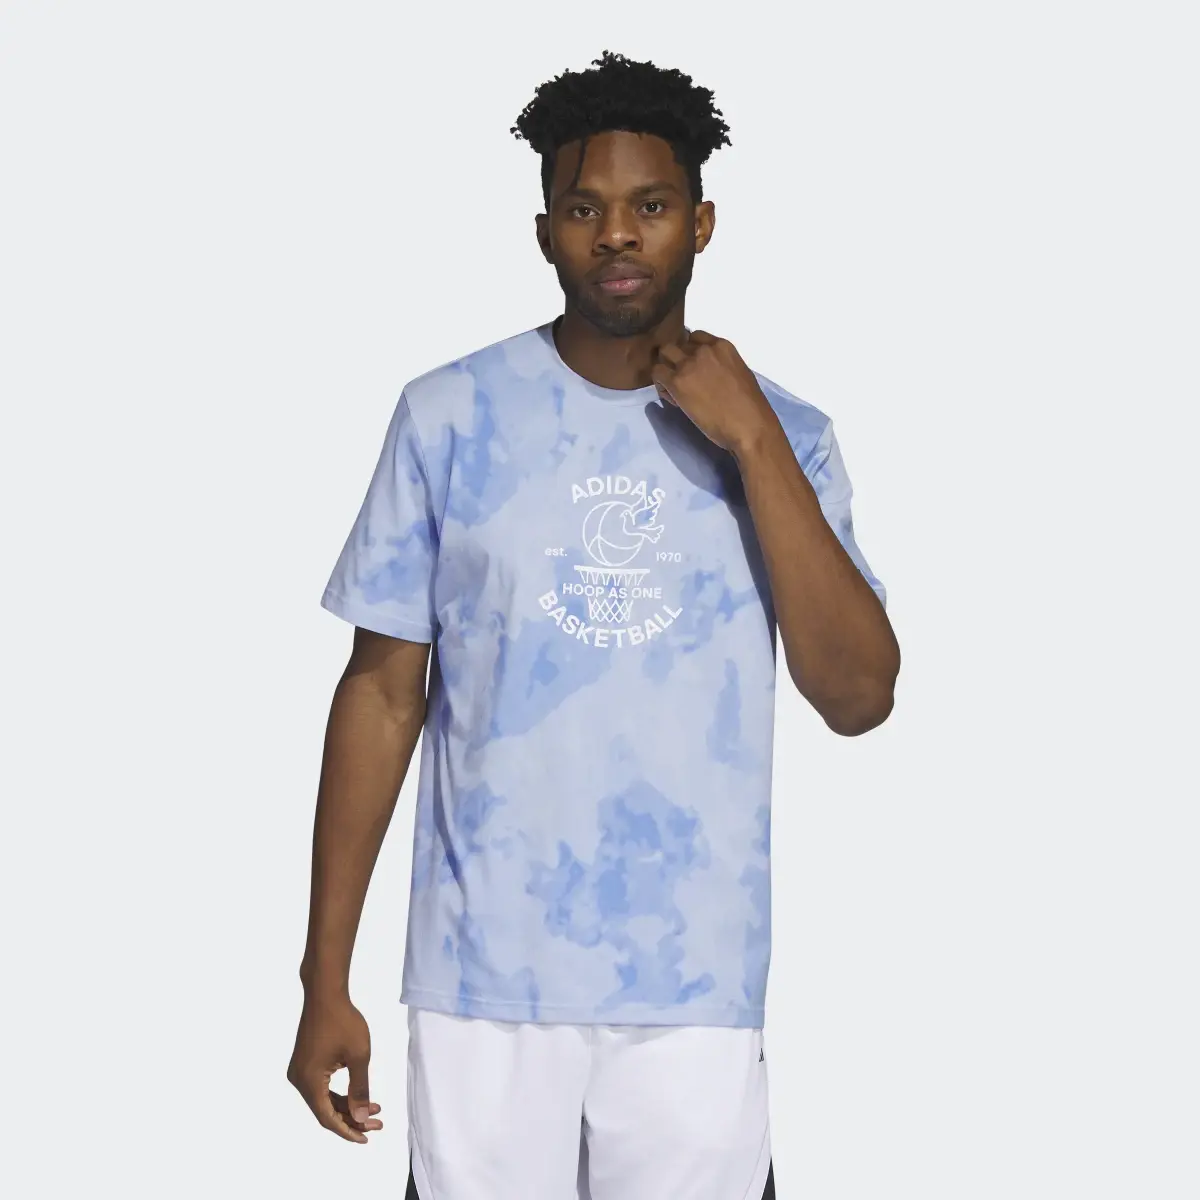 Adidas Worldwide Hoops Basketball Graphic T-Shirt. 2